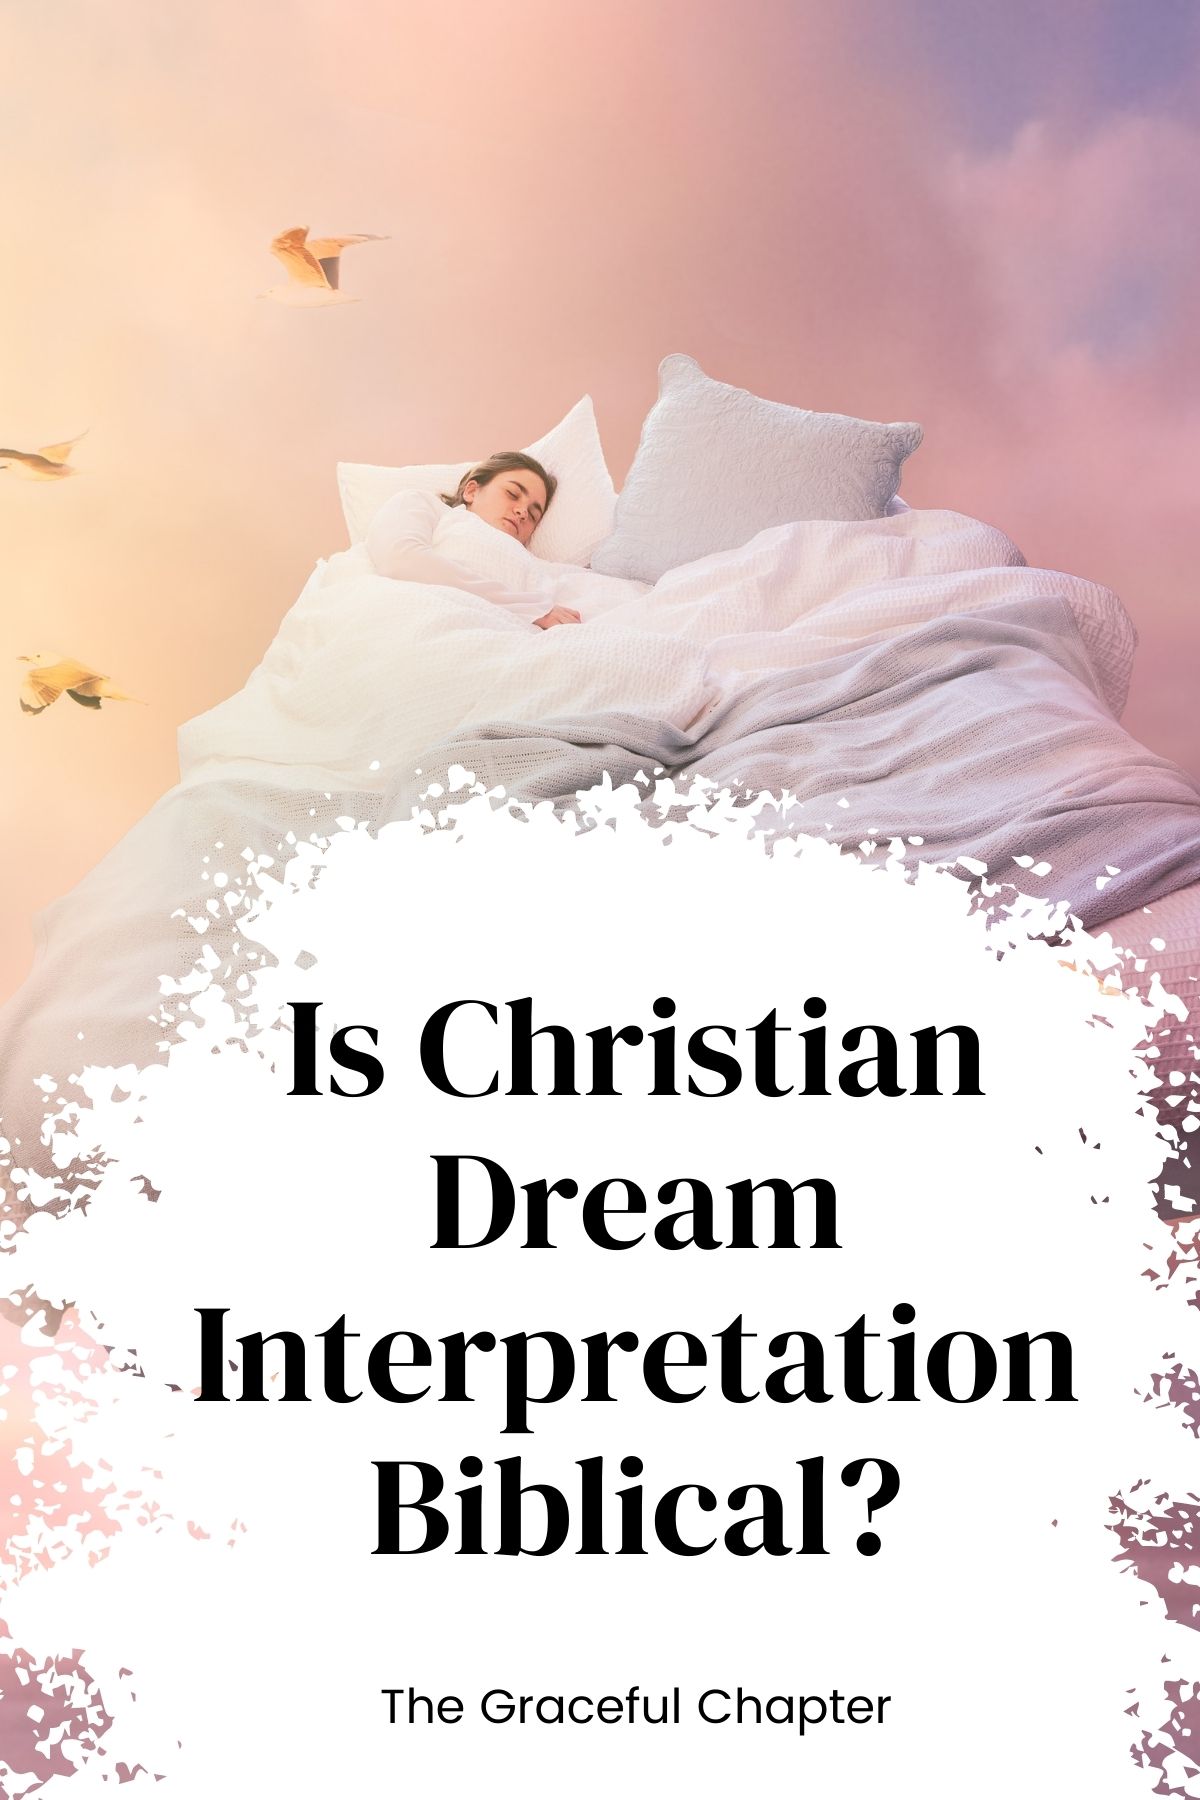 Is Christian Dream Interpretation Biblical?